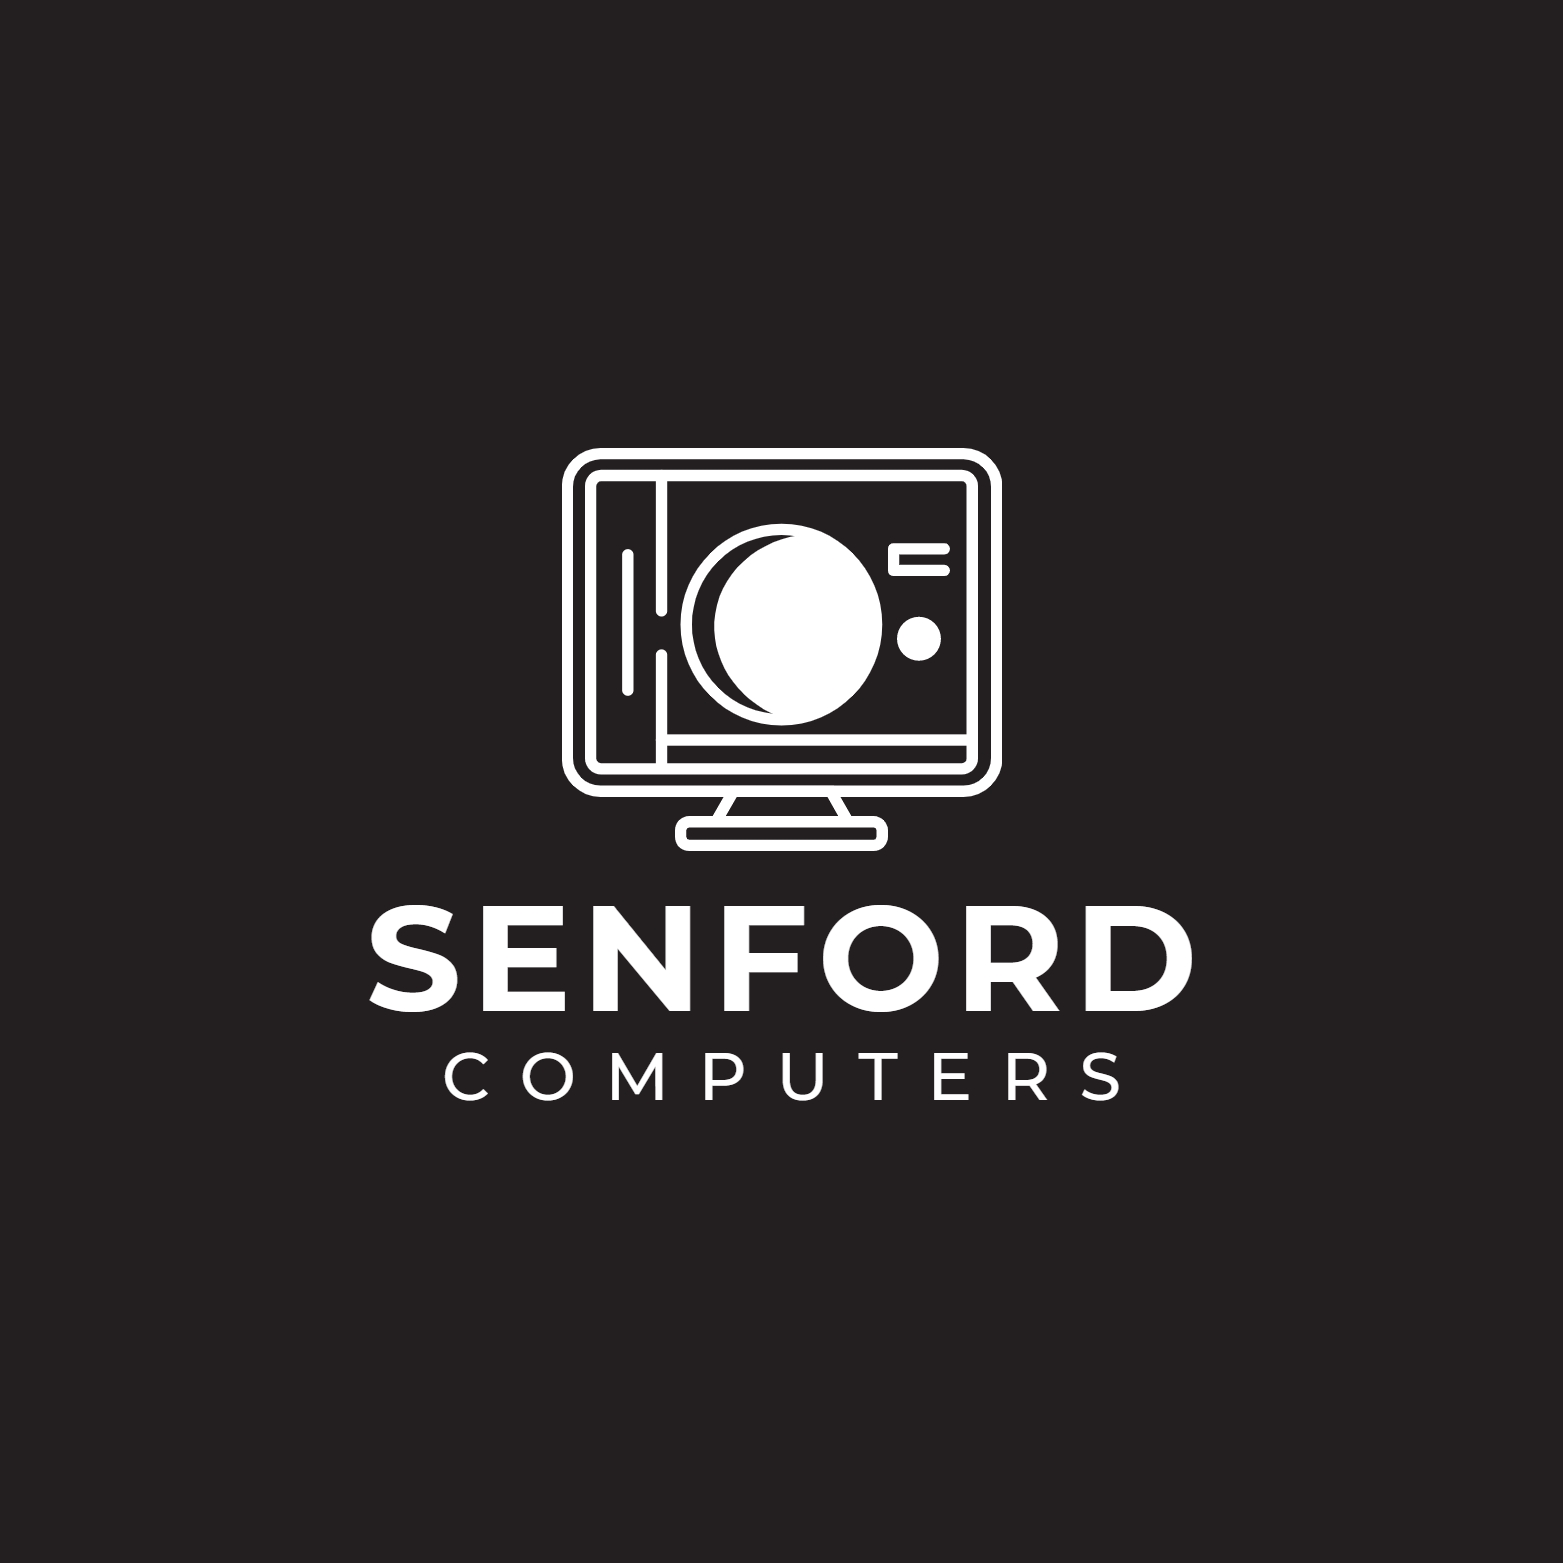 Senford Computers